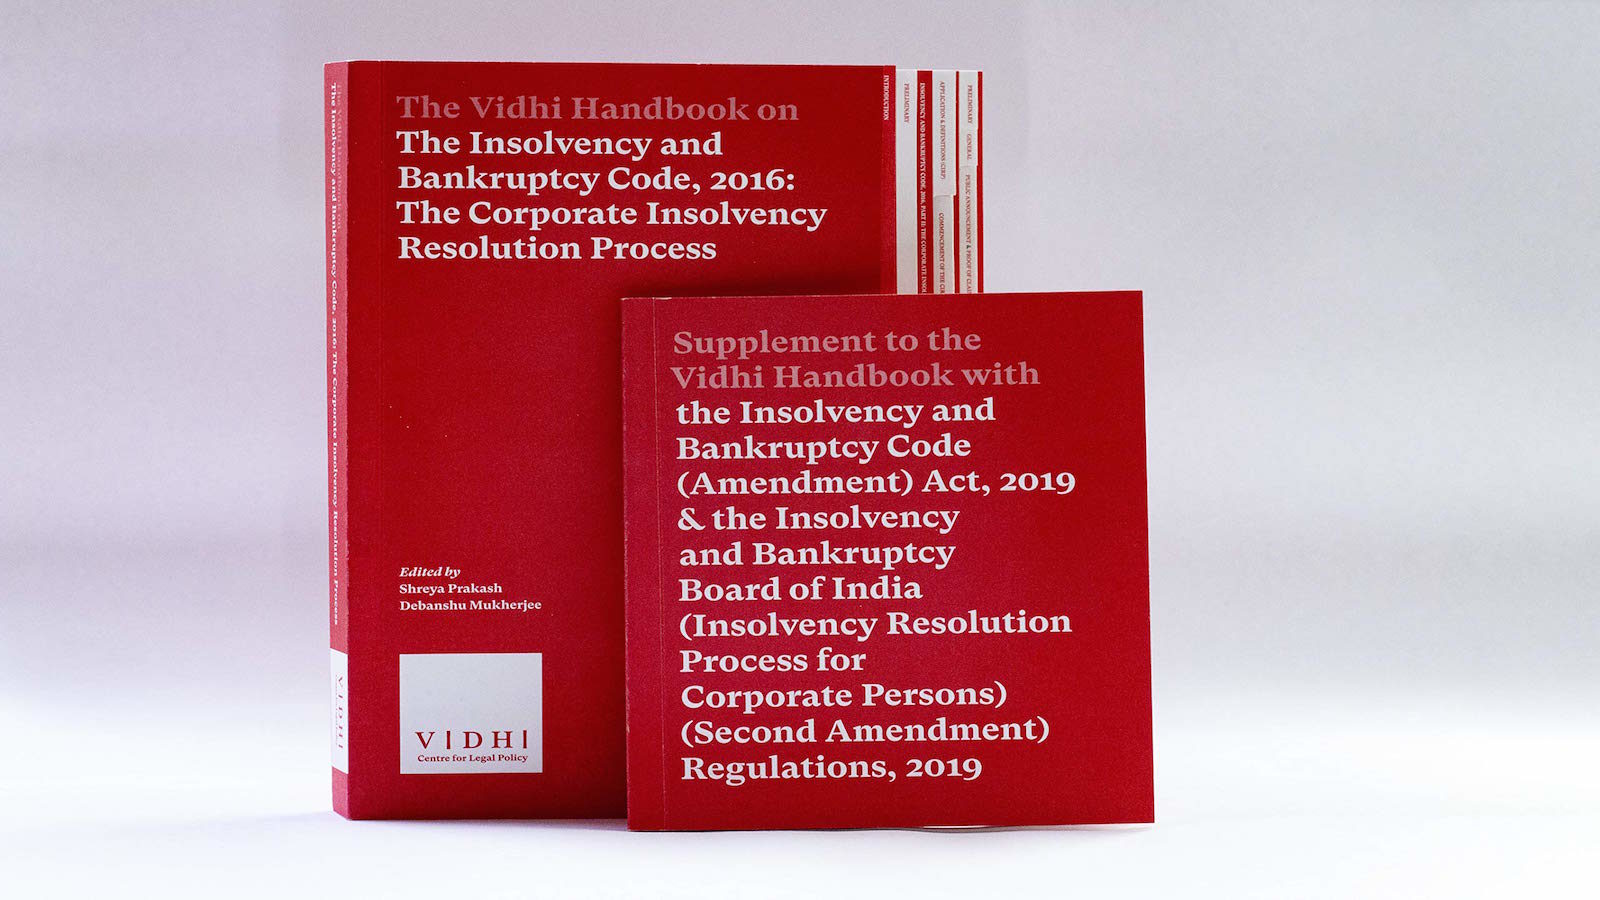 The Vidhi Handbook on the IBC